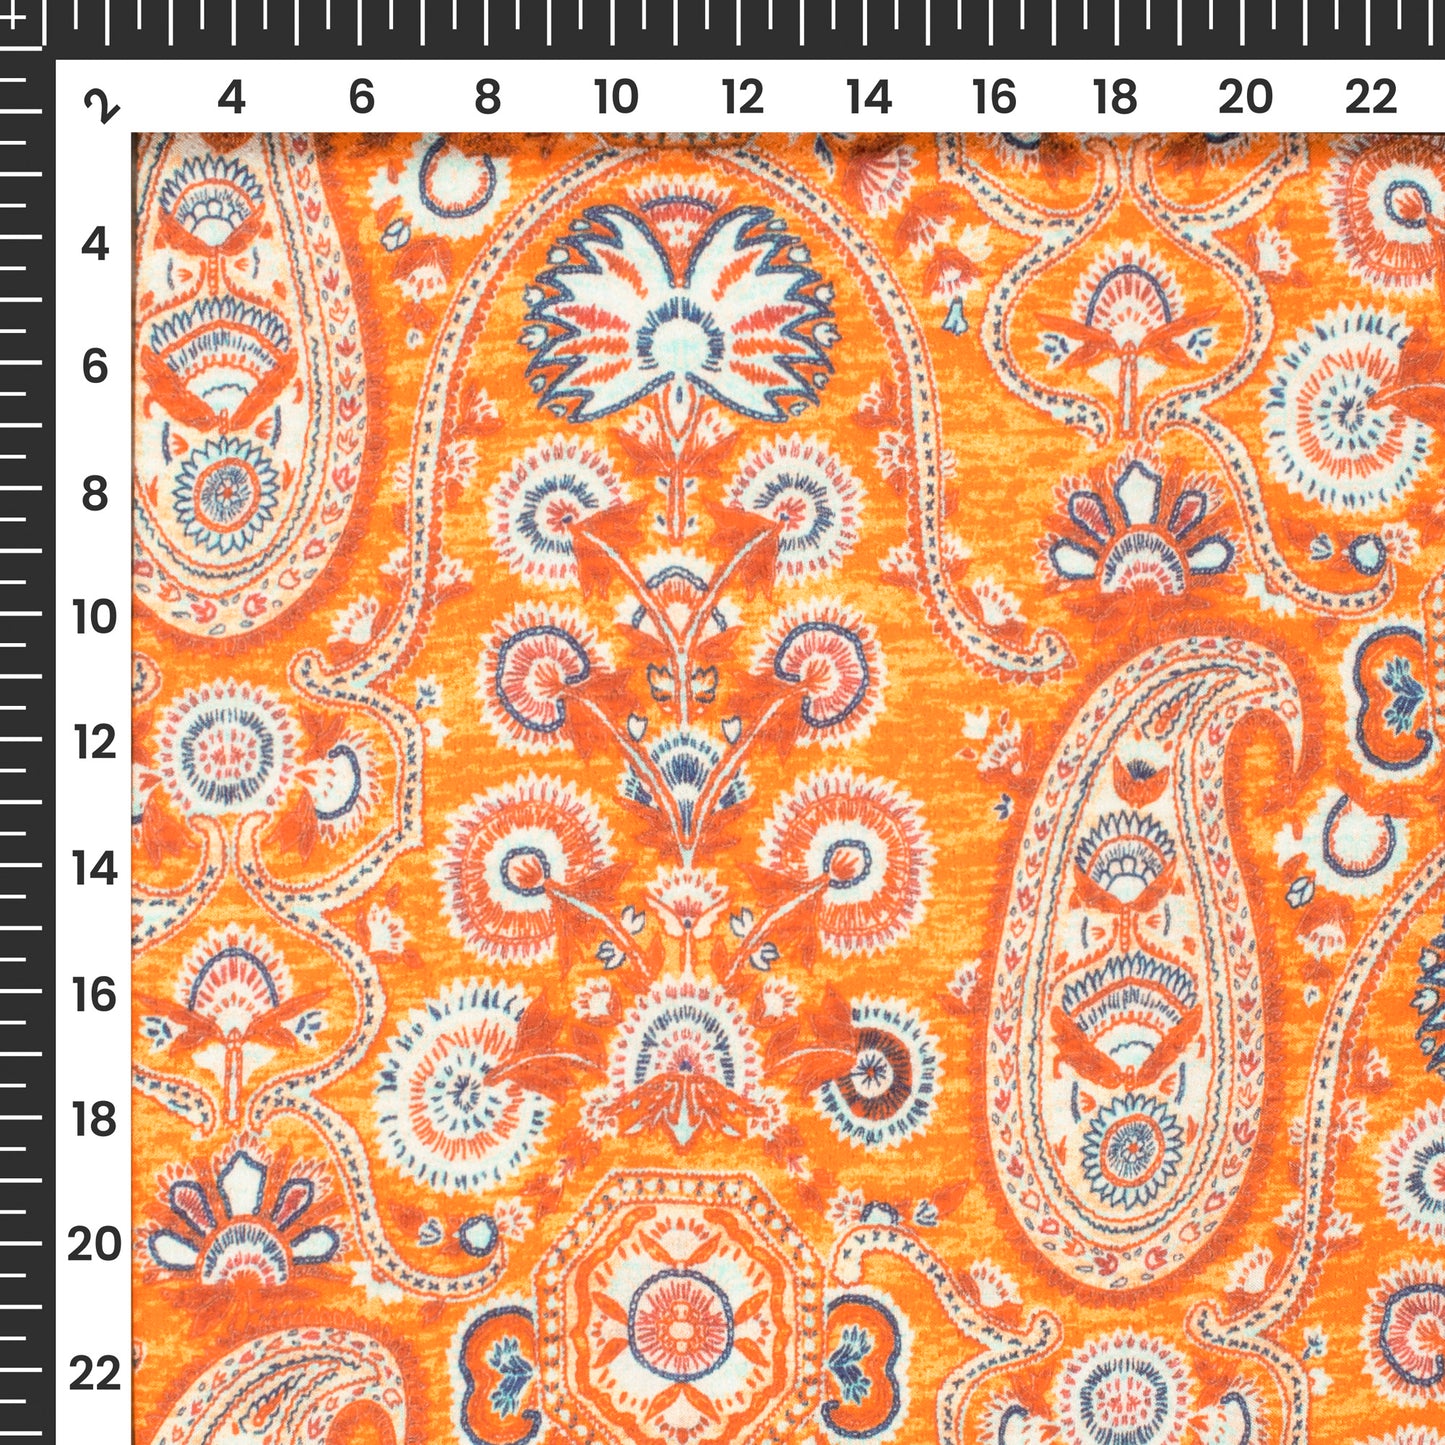 Honey Orange Paisley Printed Sustainable Eucalyptus Fabric